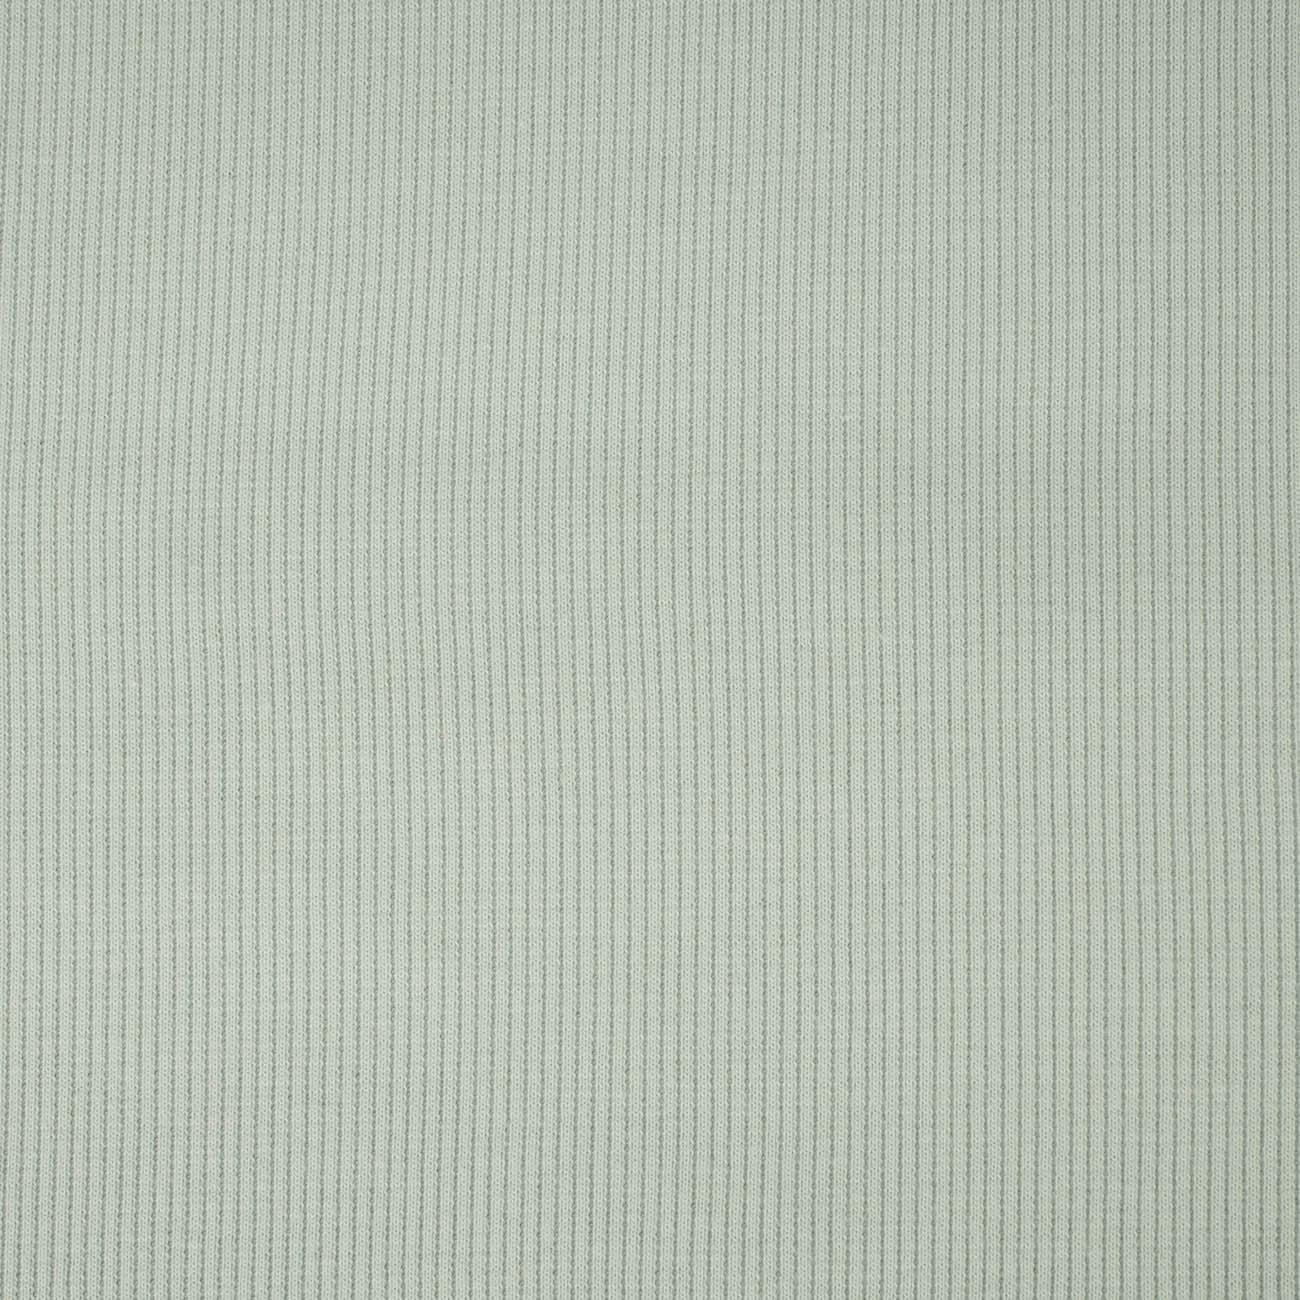 D-86 LIGHT MINT - Ribbed knit fabric